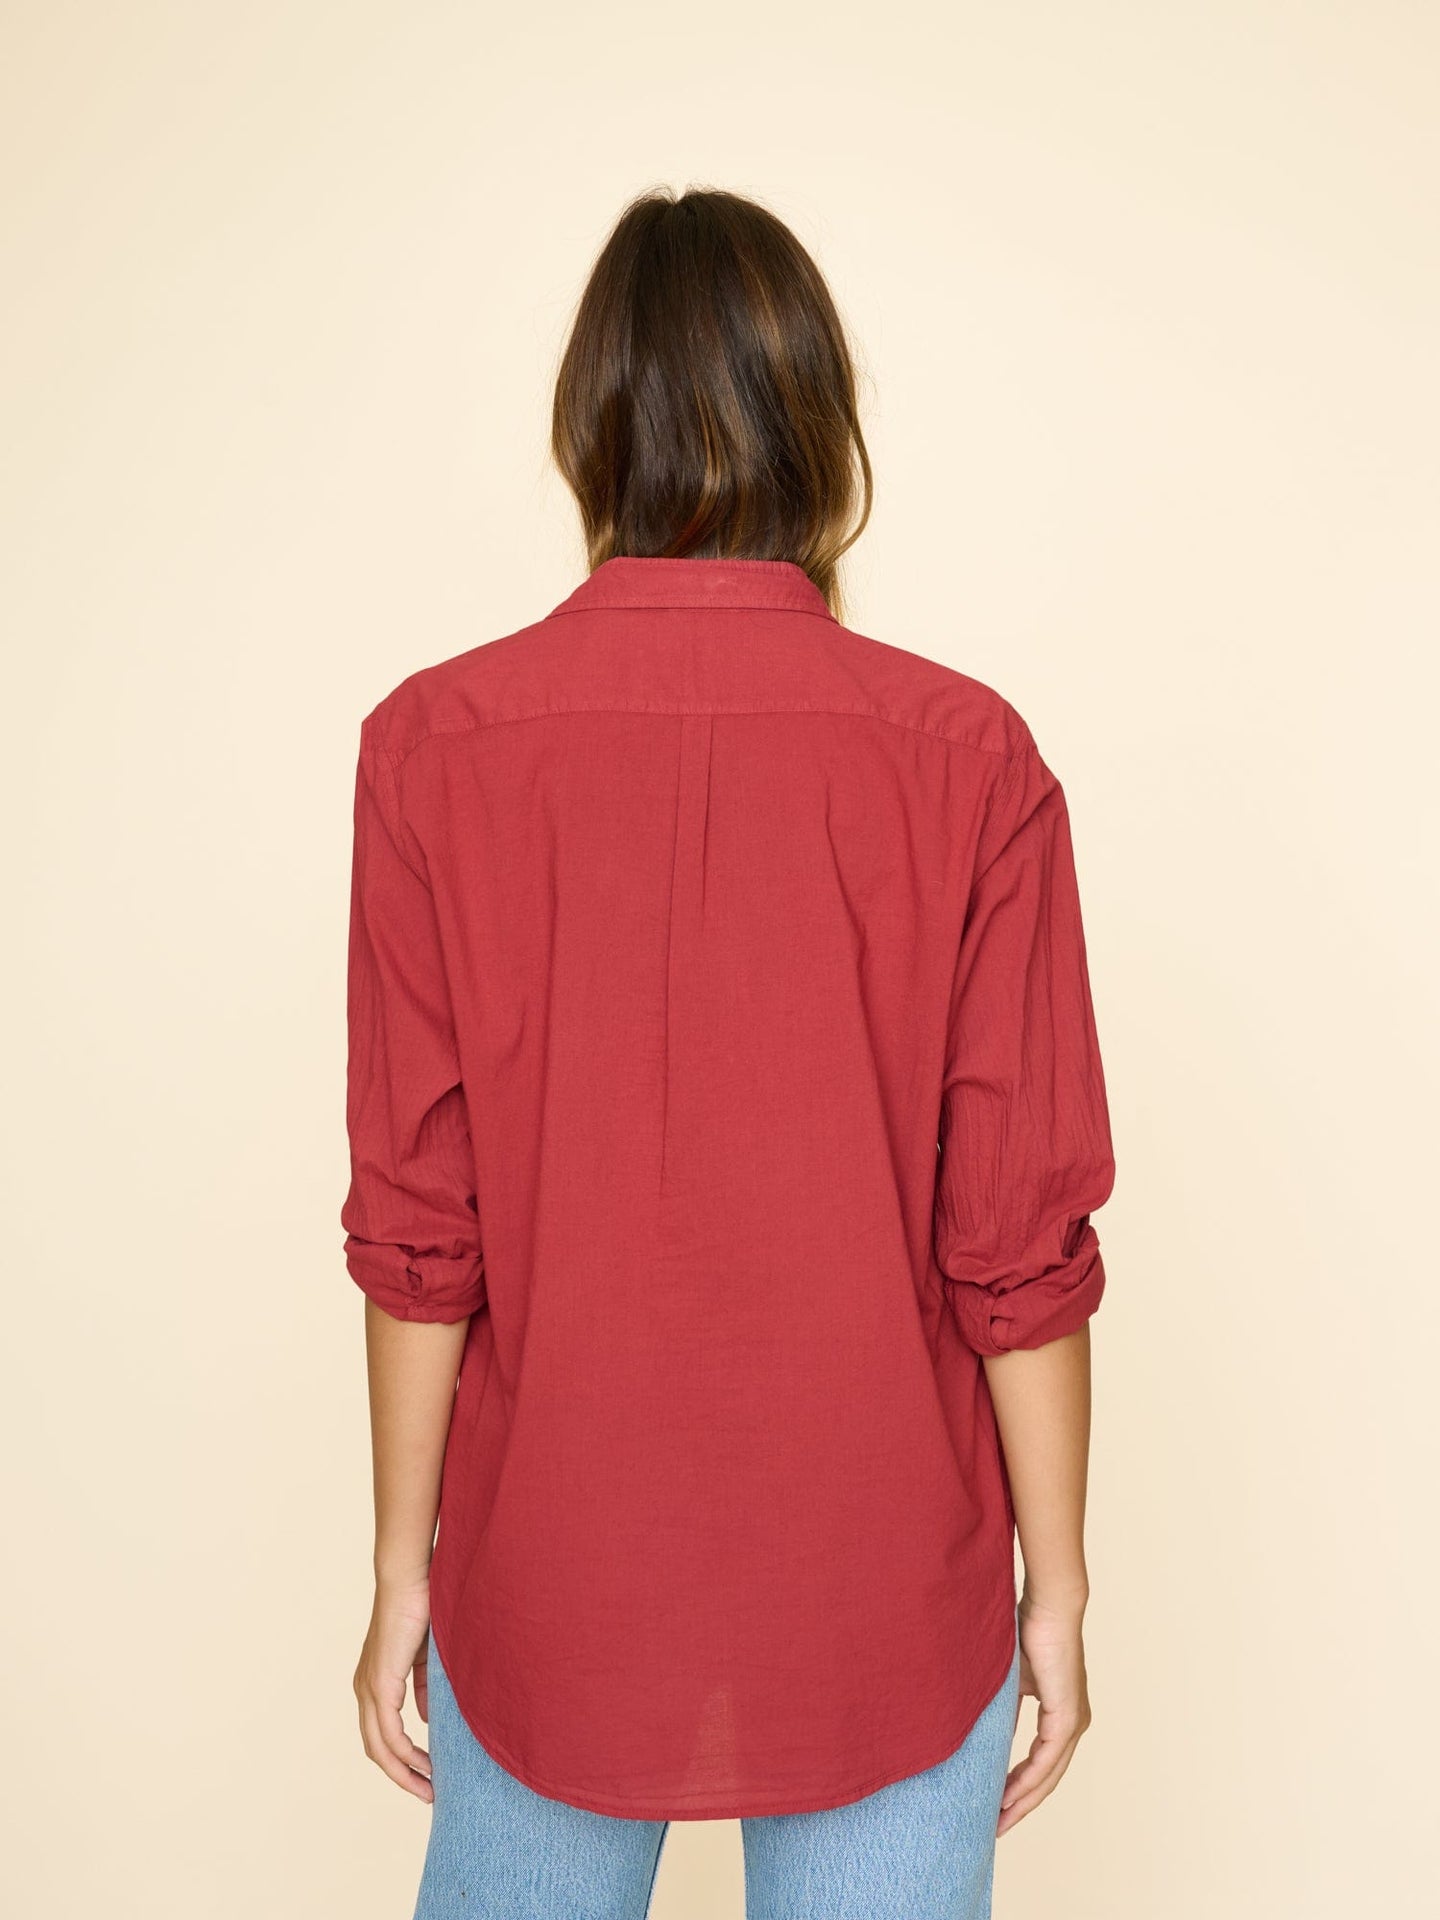 Xirena Shirt Brick Red Beau Shirt